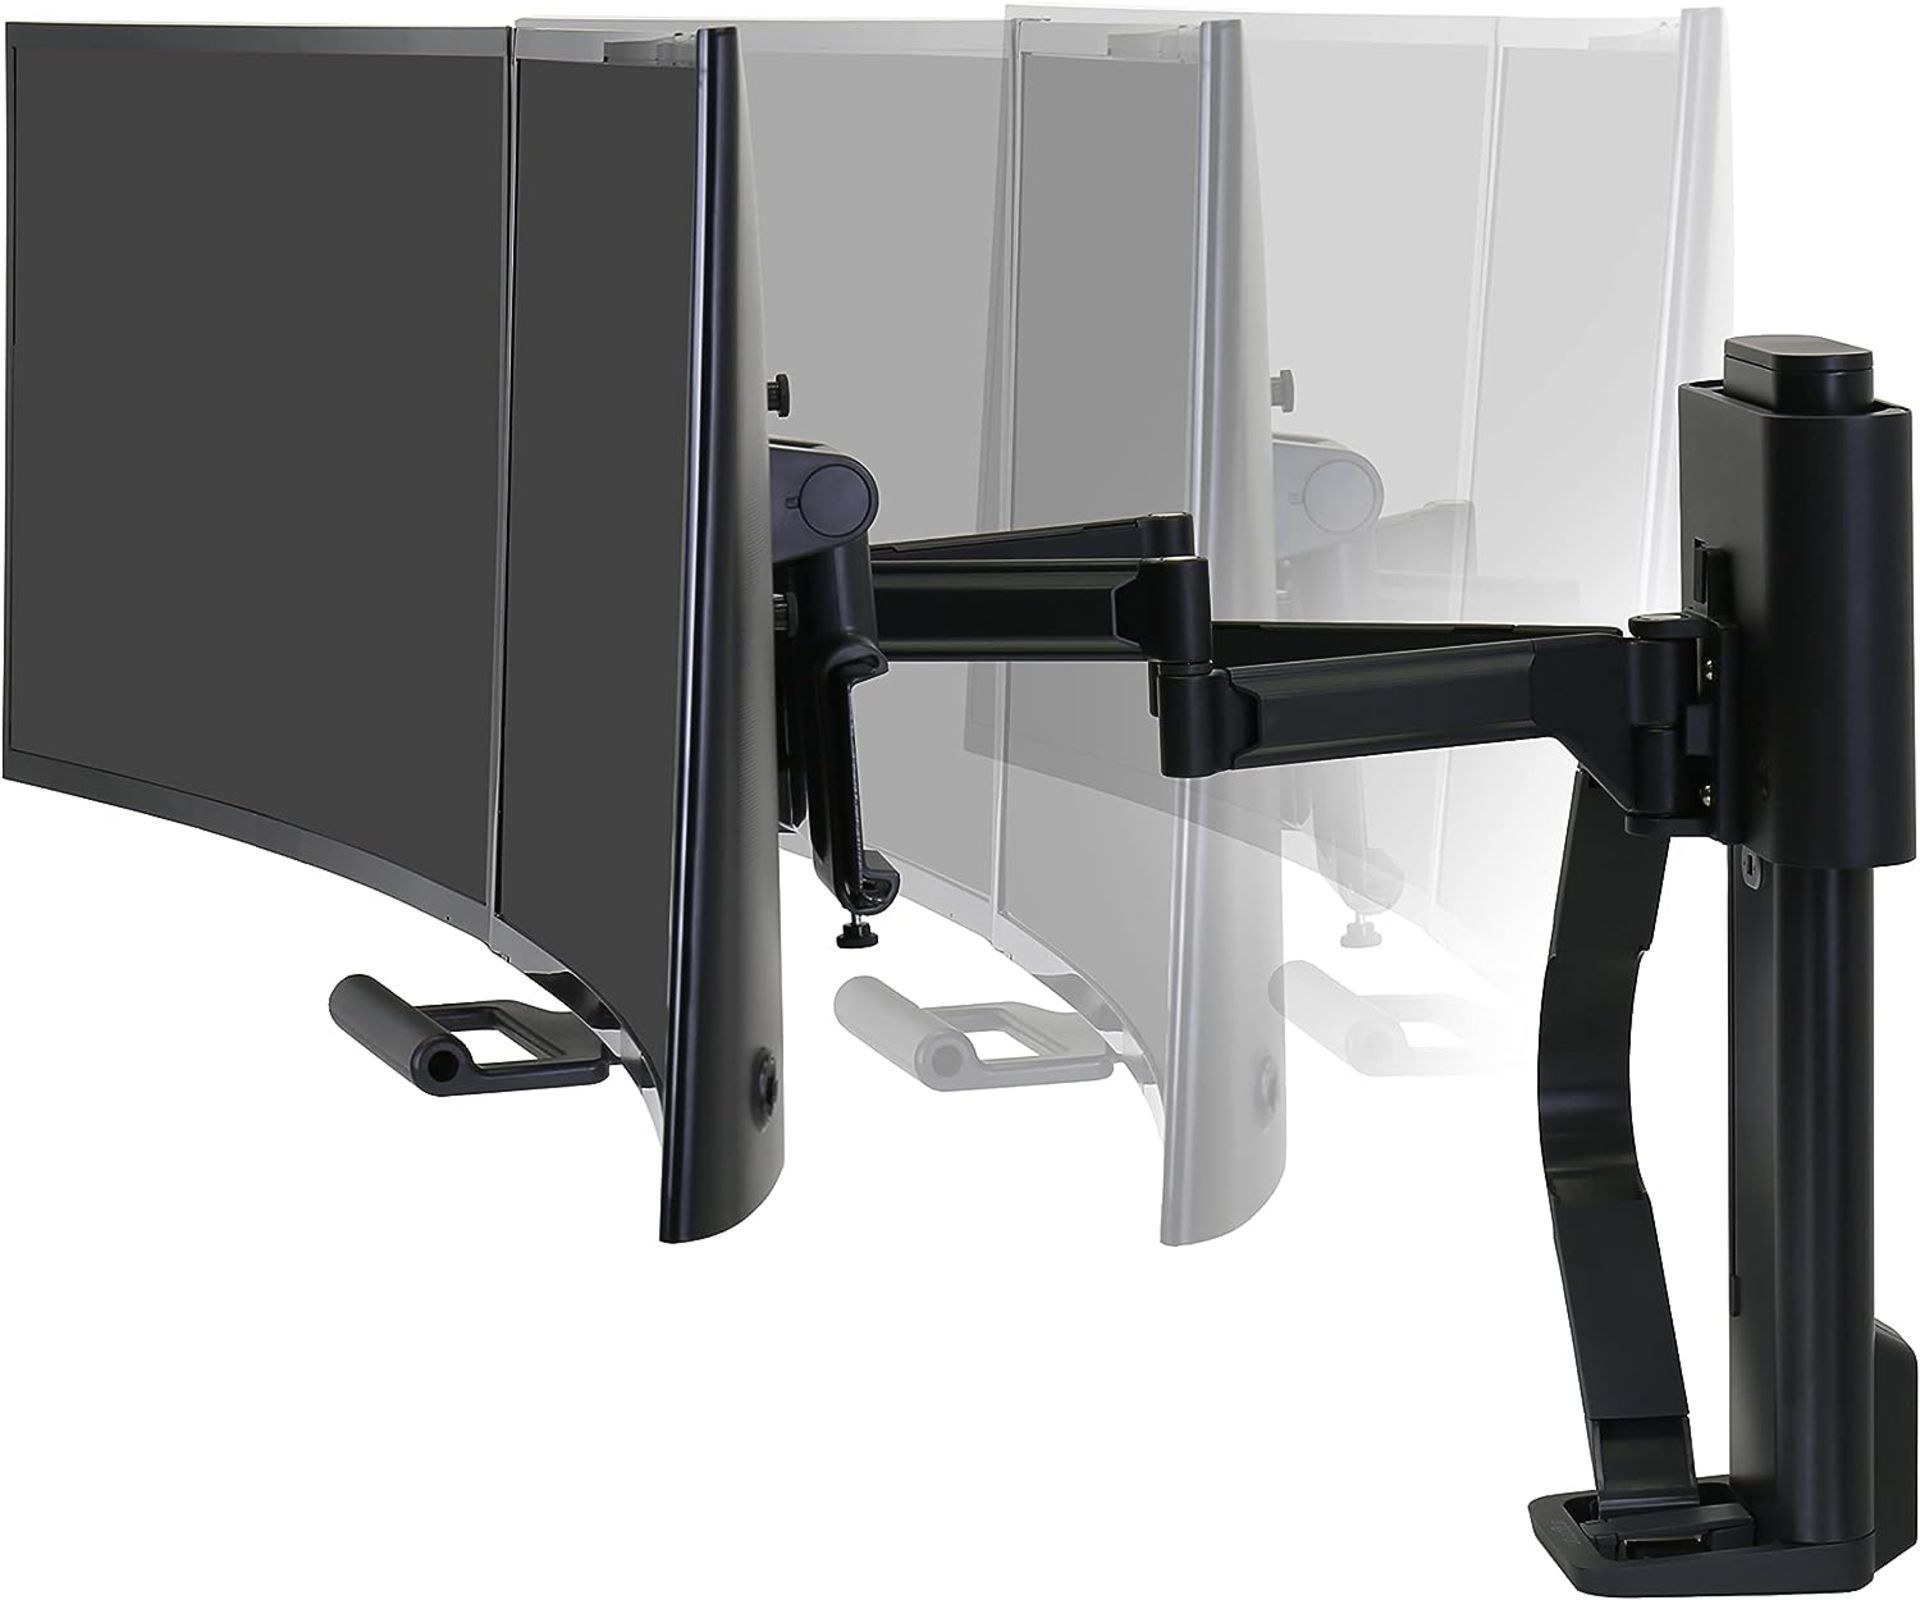 NEW & BOXED ERGOTRON Trace Dual Monitor Arm, VESA Desk Mount. RRP £417. (PCK5). for 2 Monitors Up to - Bild 2 aus 8